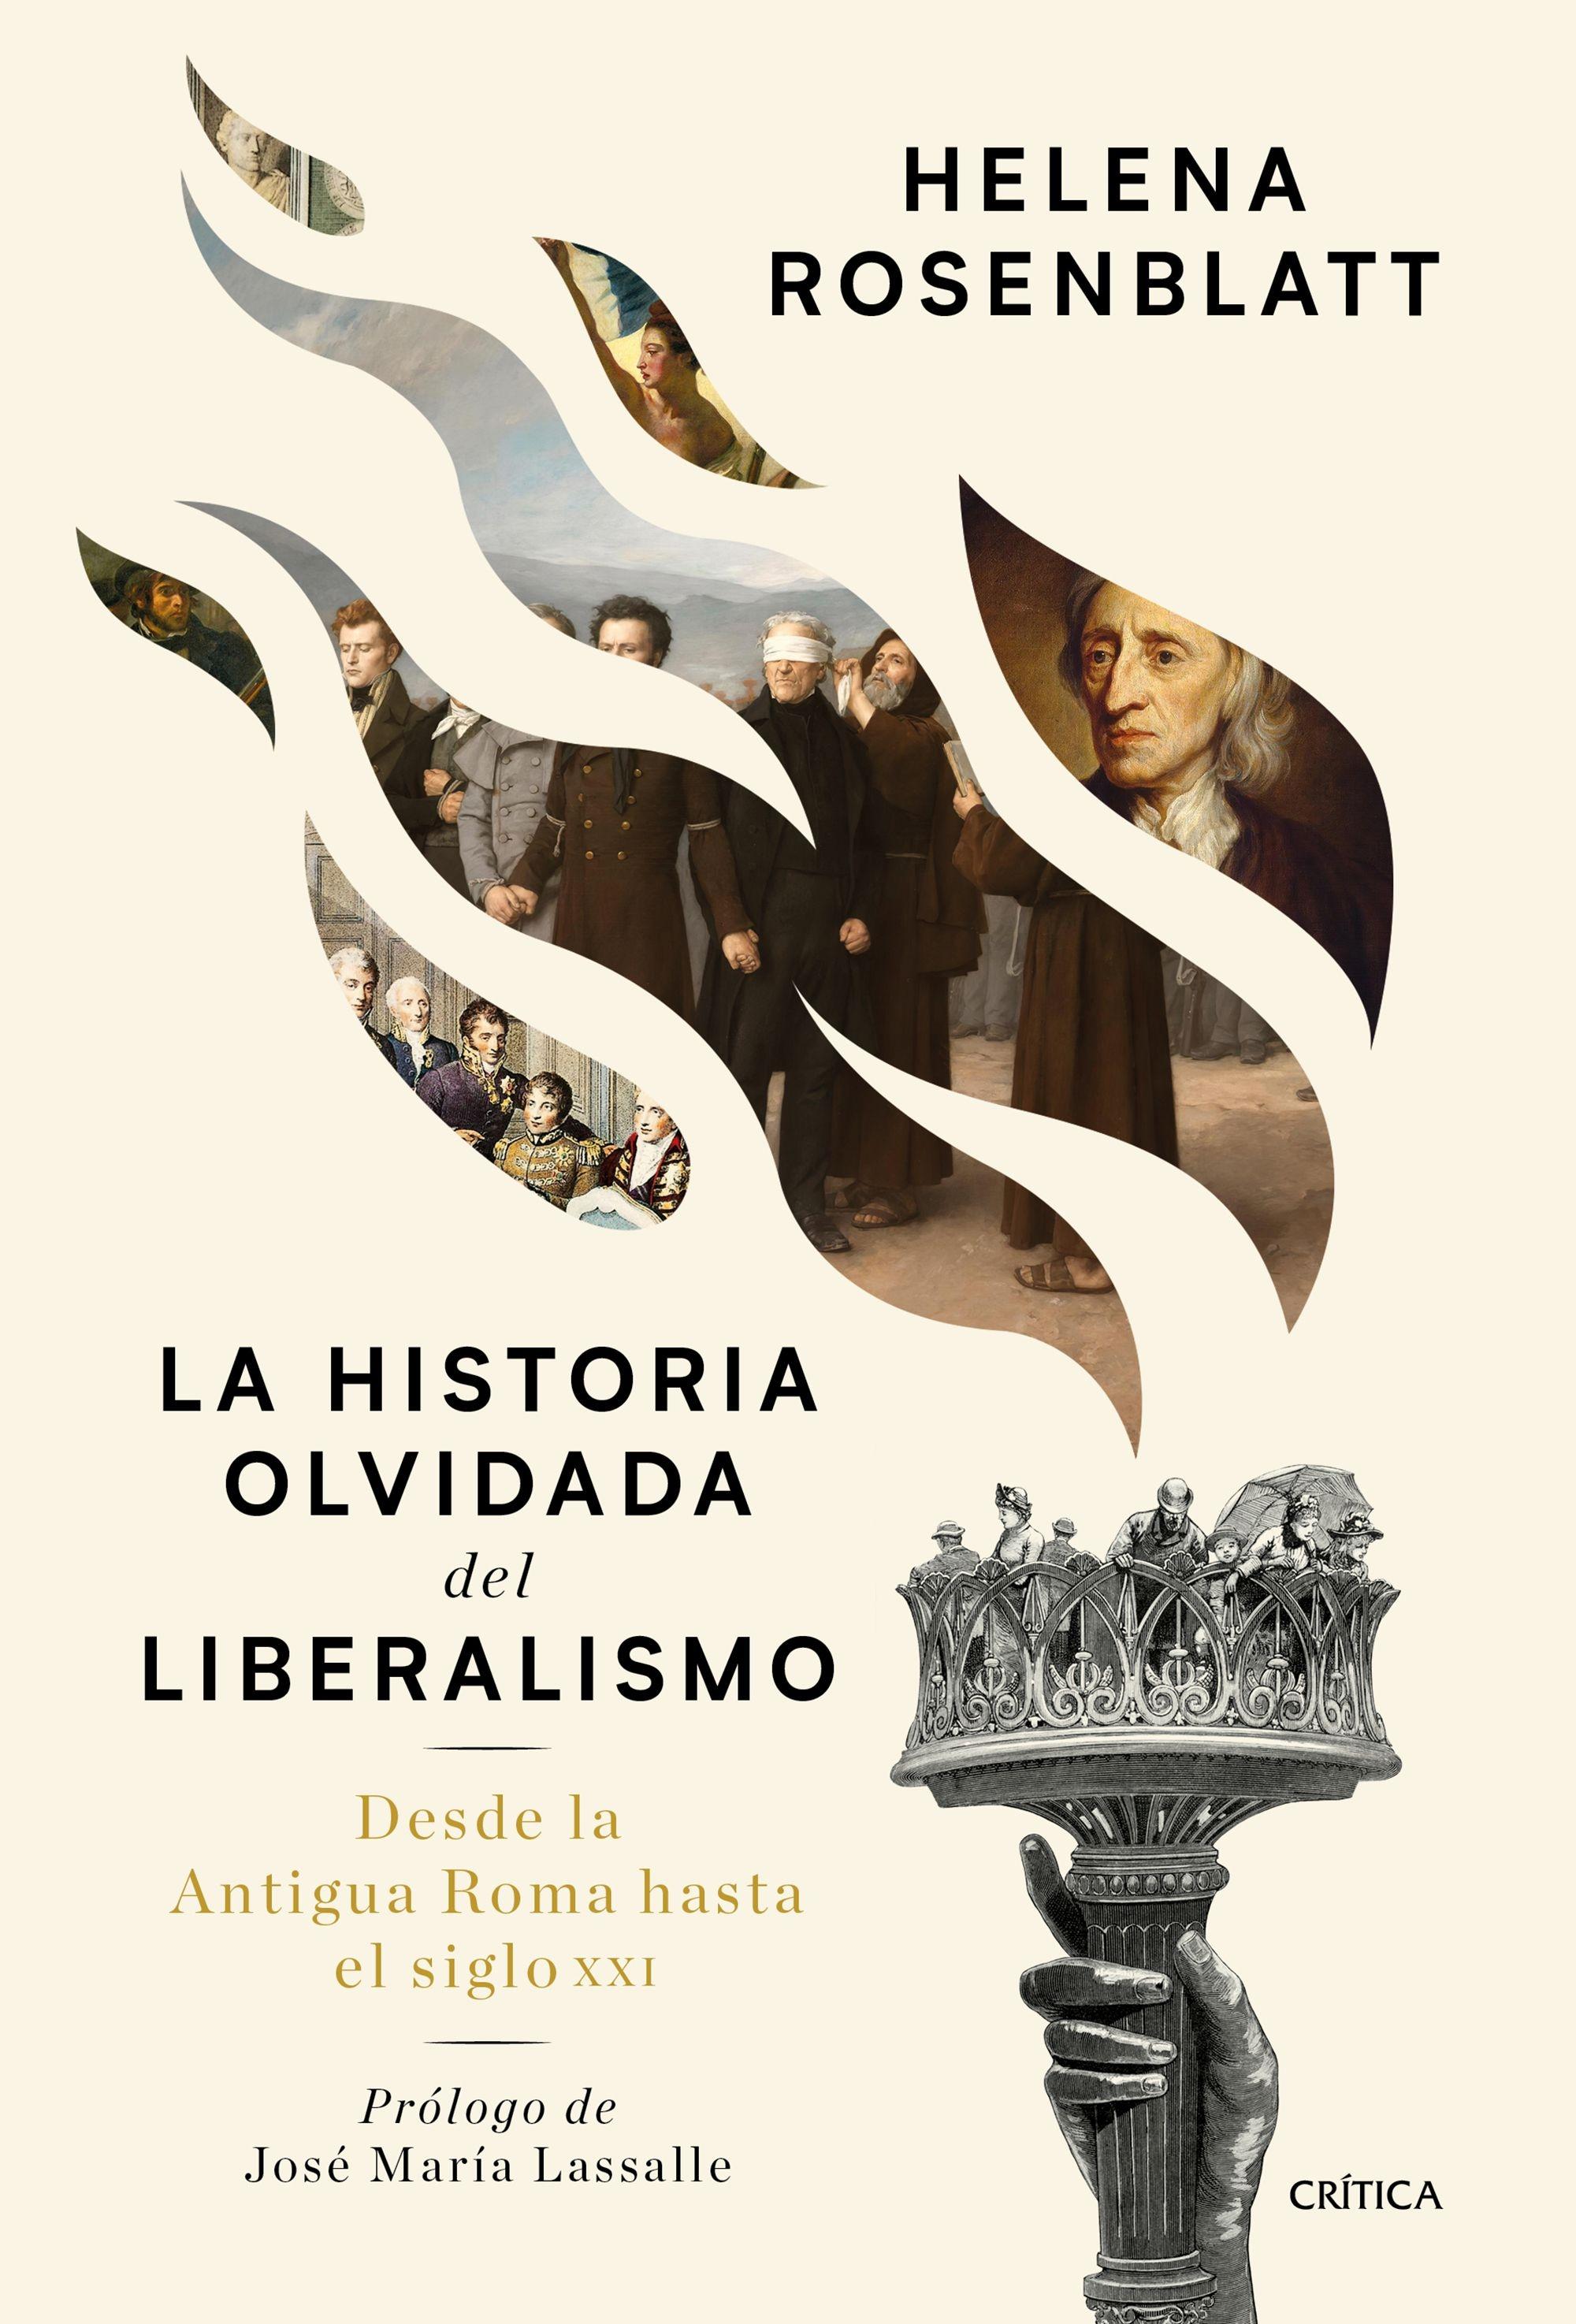 La Historia Olvidada del Liberalismo "Desde la Antigua Roma hasta el Siglo Xxi". 